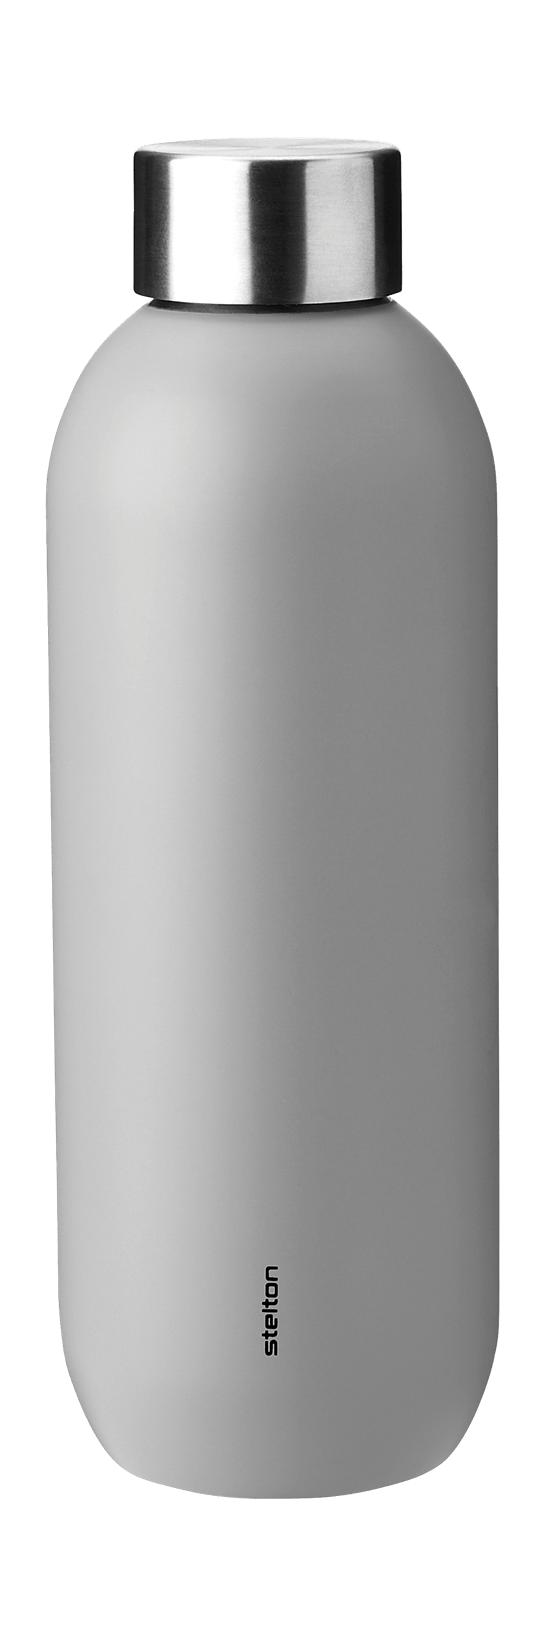 Stelton Keep Cool Termo Bottle 0,6 L, gris claro